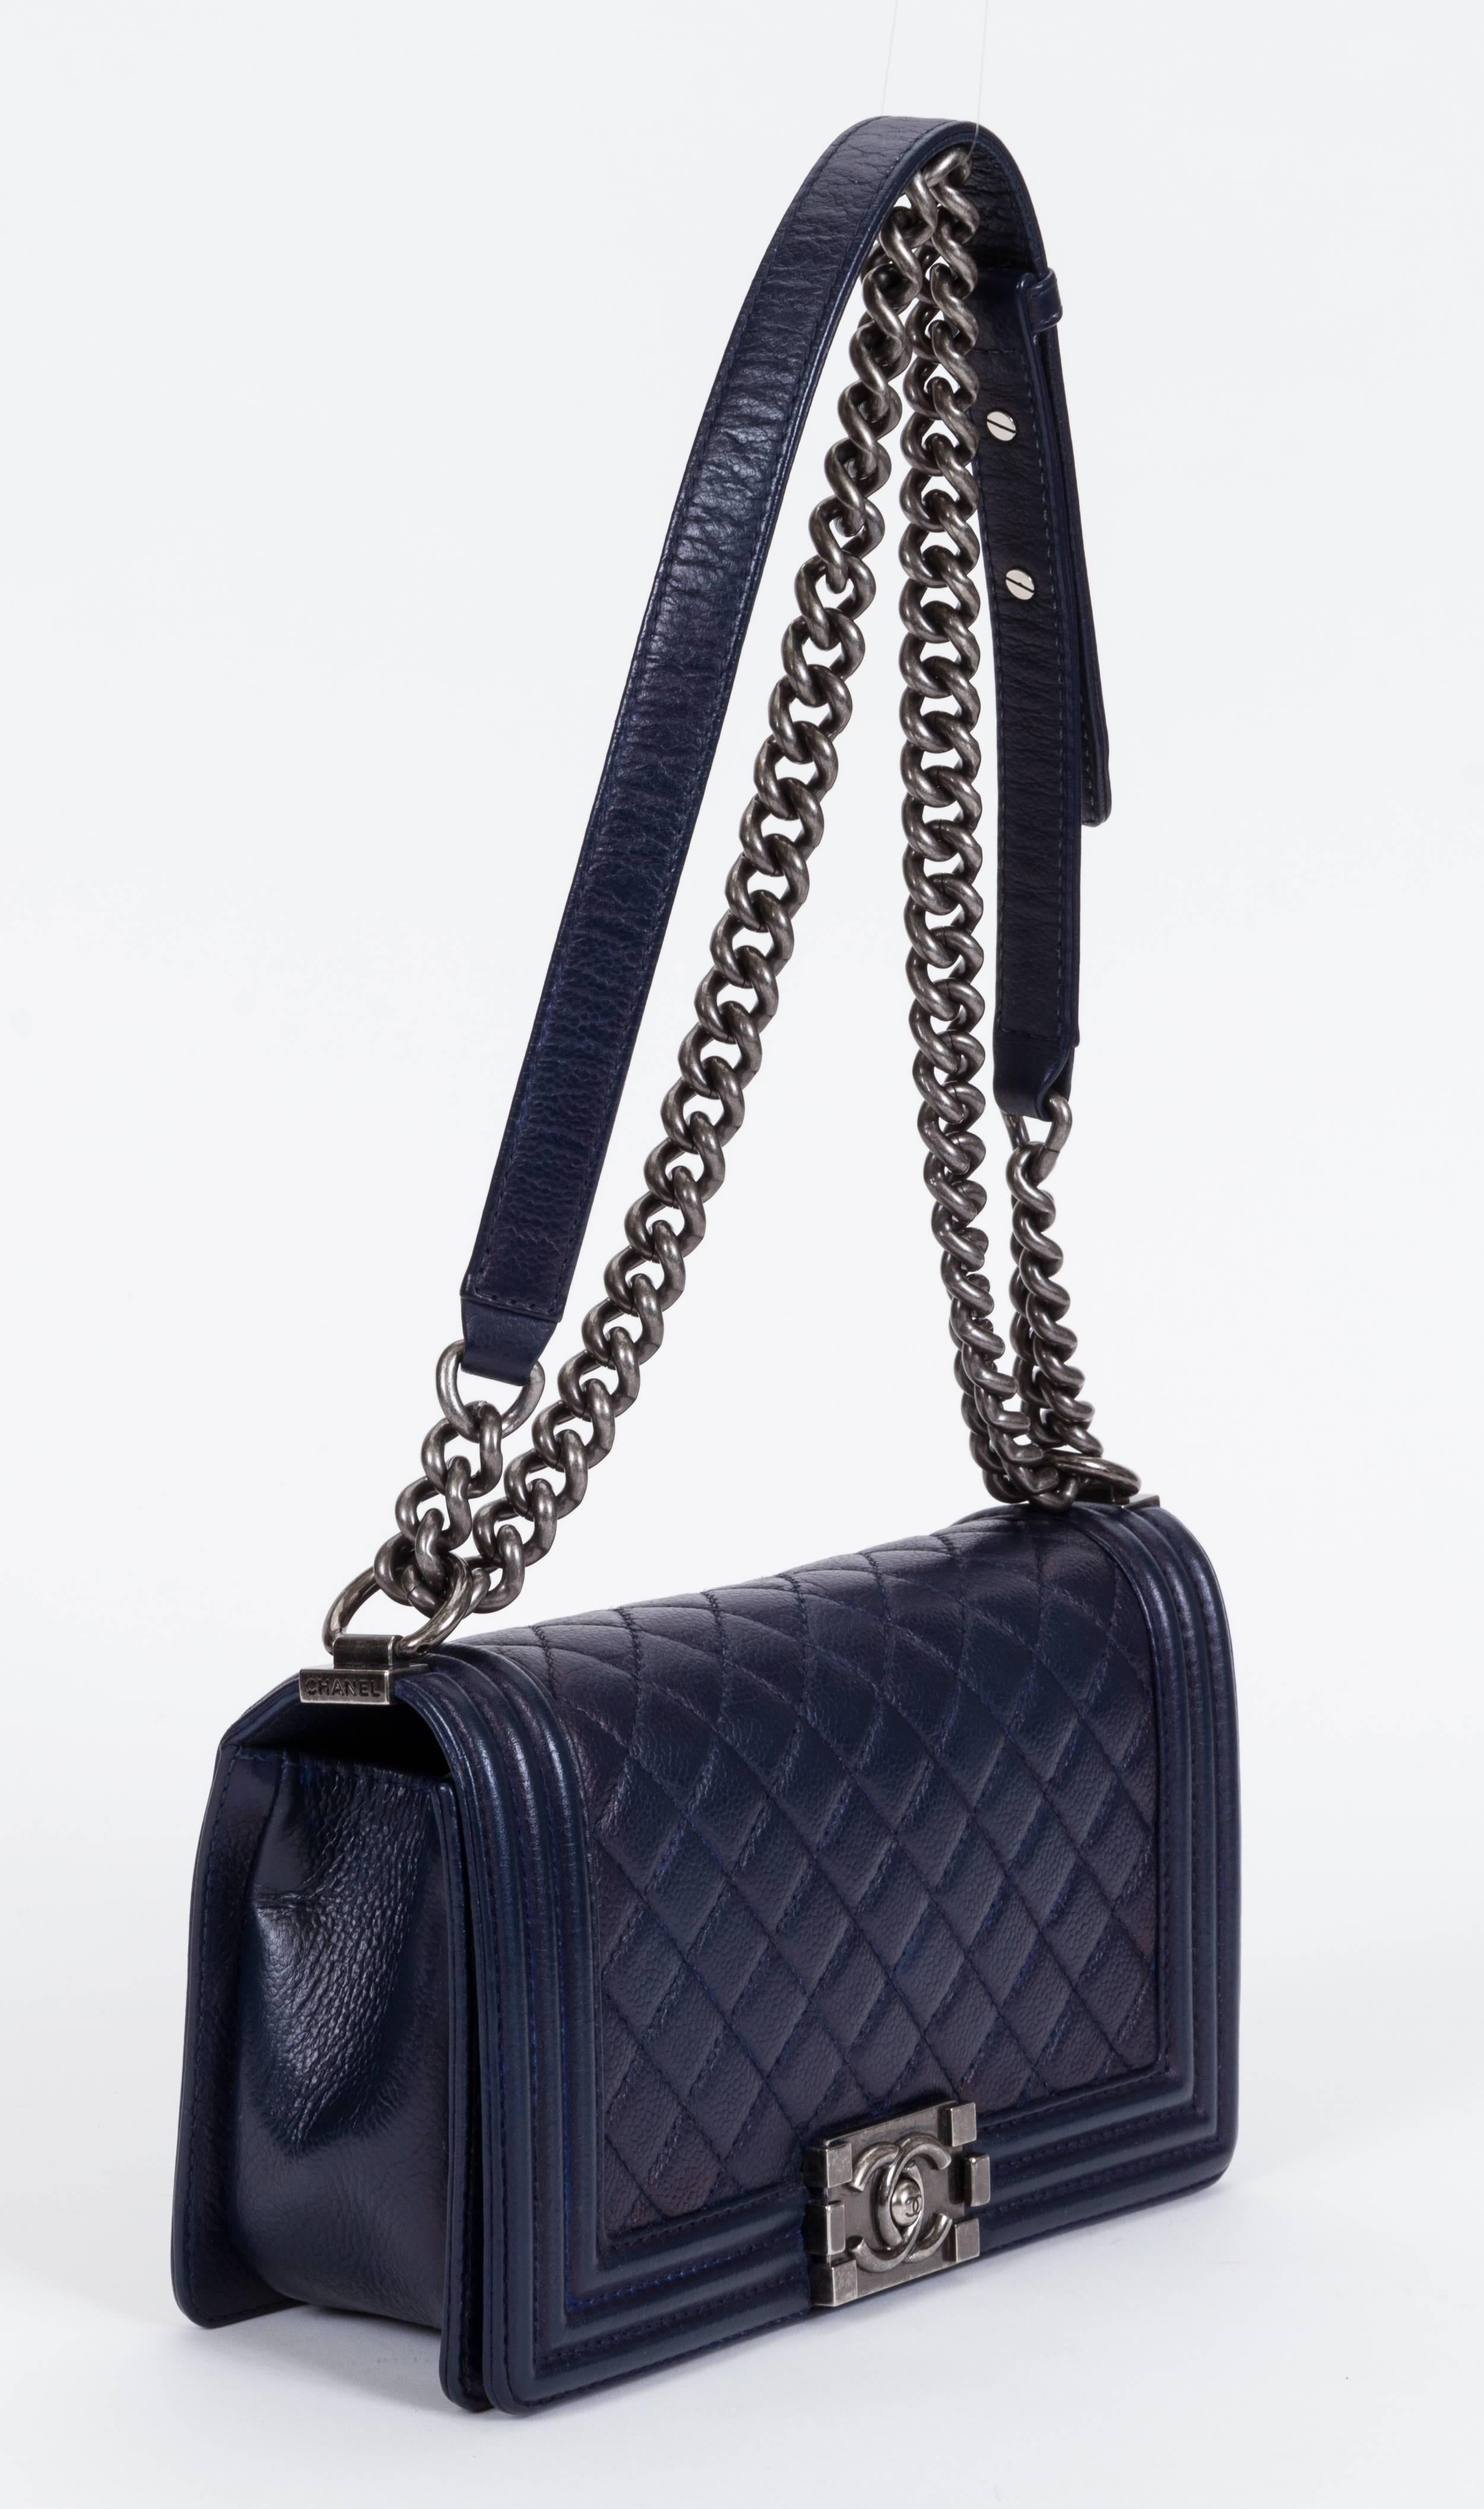 Chanel navy caviar quilted medium boy bag. Gunmetal hardware. Shoulder drop 12